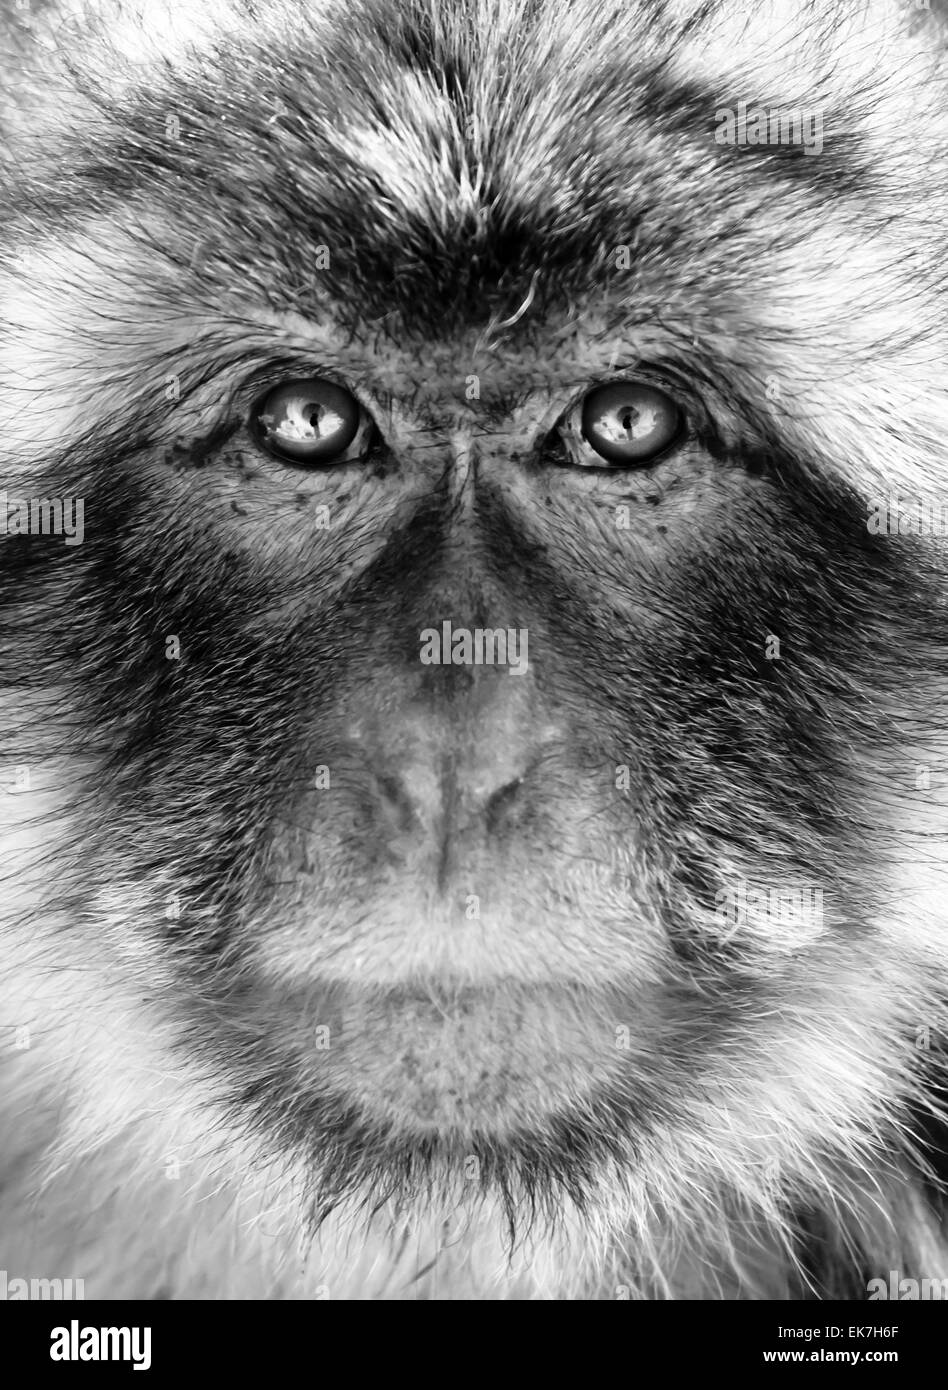 Black and white monkey portrait Stock Photo